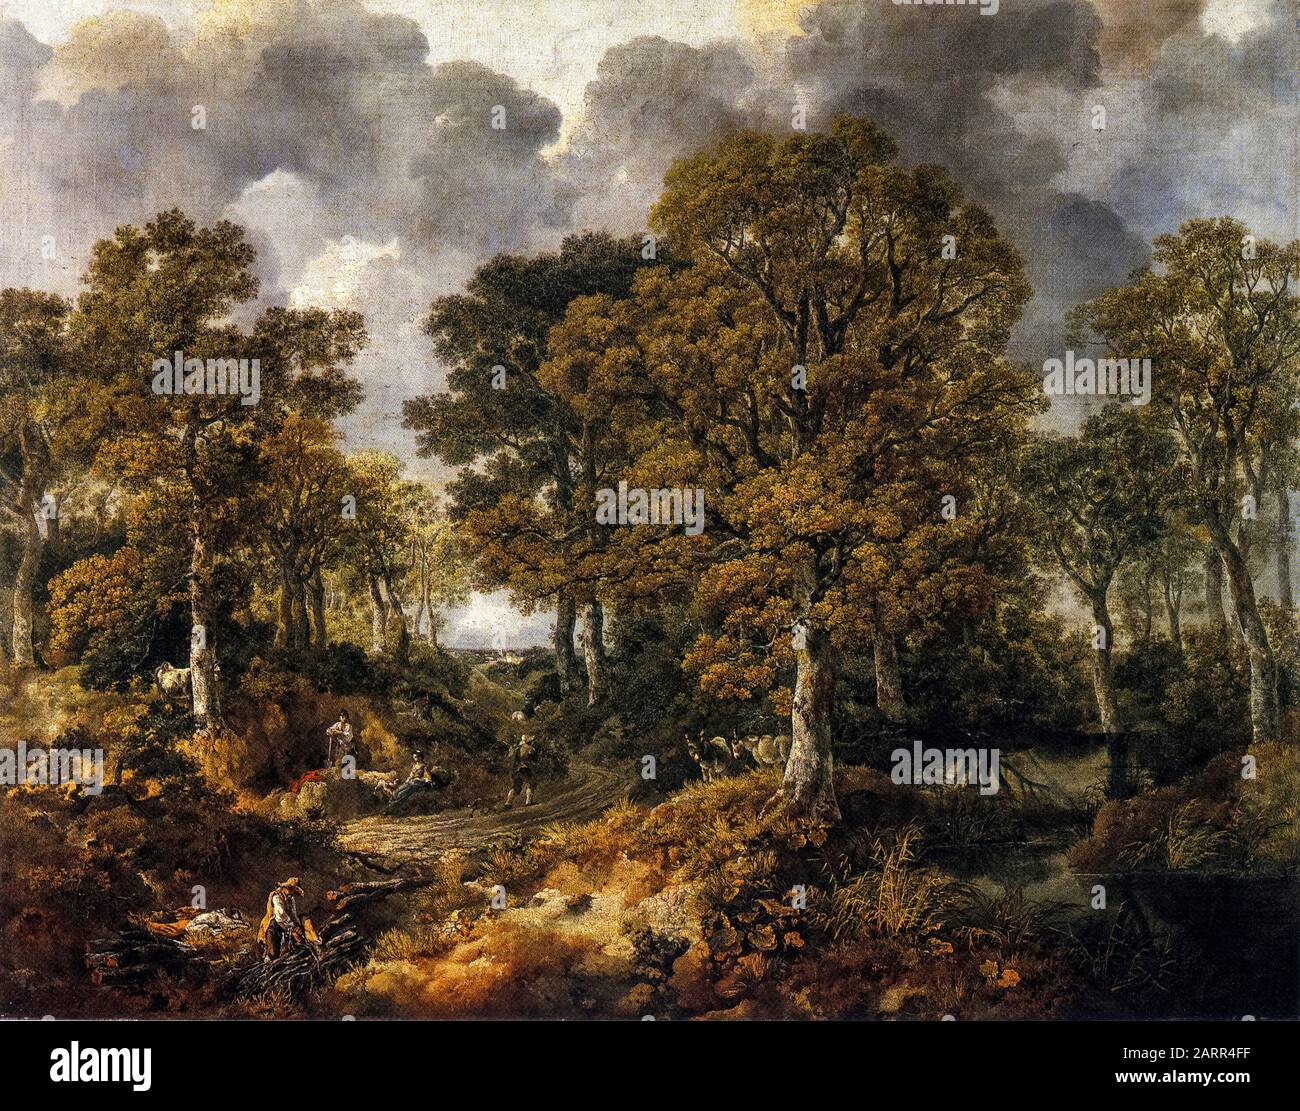 Thomas Gainsborough, Cornard Wood, near Sudbury, Suffolk, landscape painting, 1748 Stock Photo